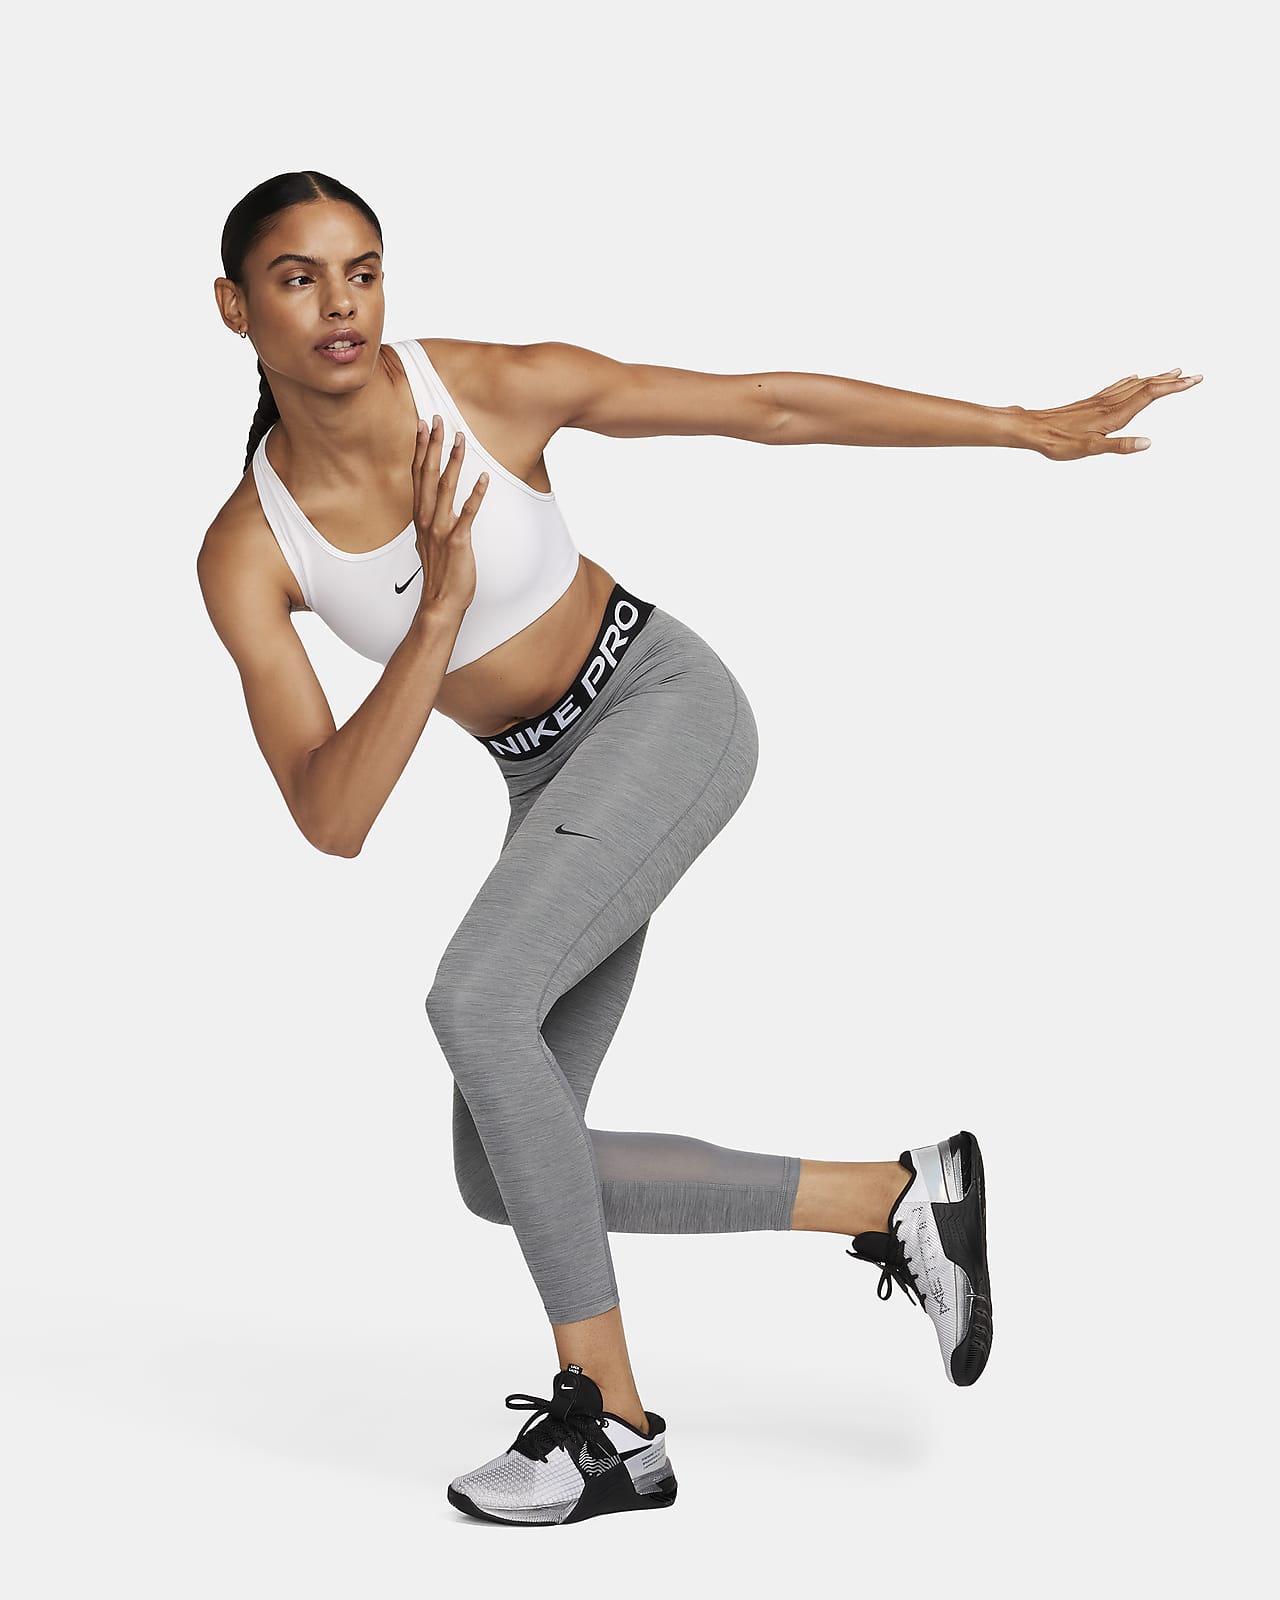 Women's Nike Pro Mid-Rise Leggings